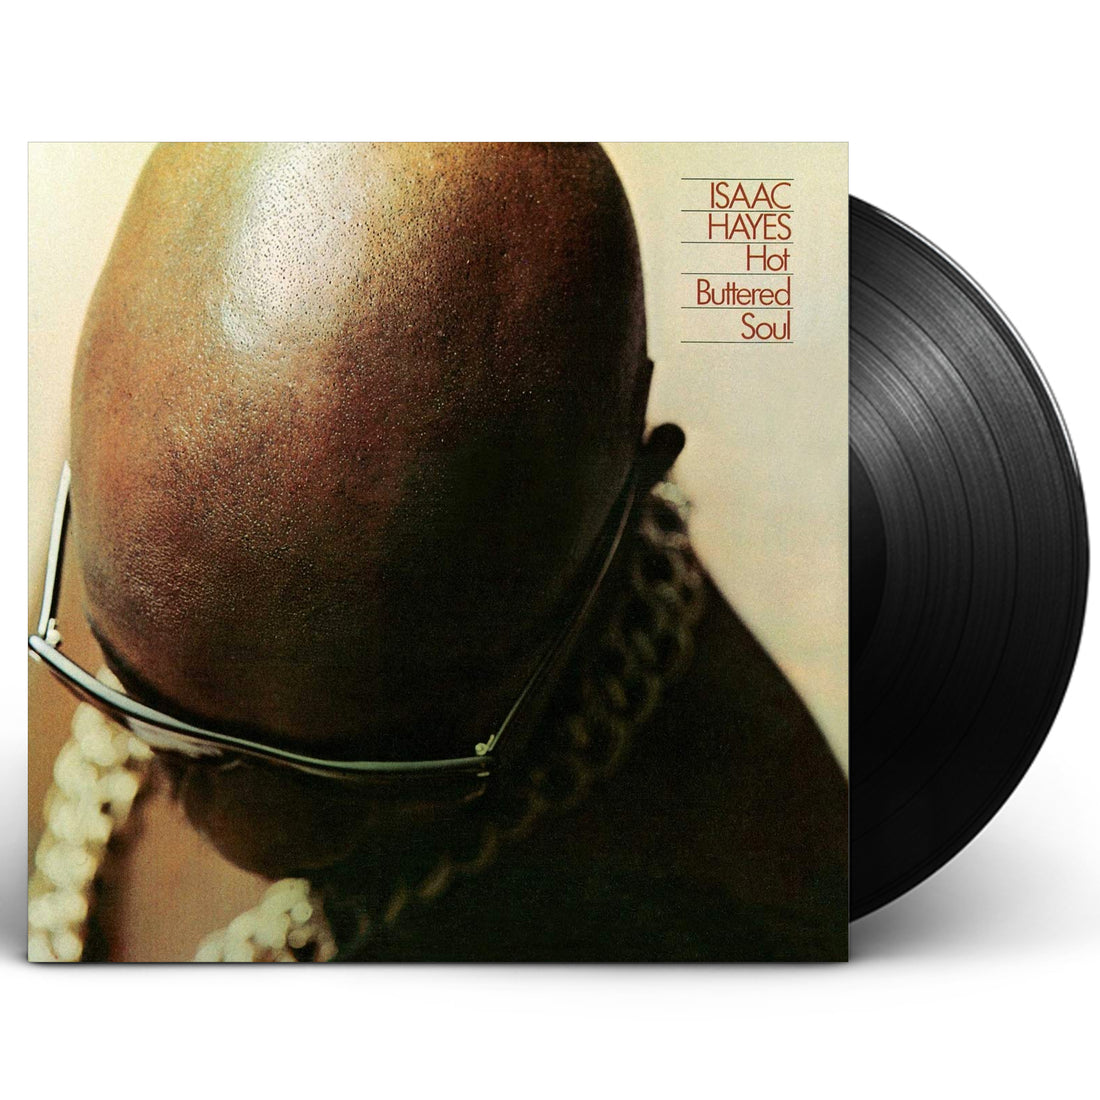 Isaac Hayes "Hot Buttered Soul" LP 180 Gram Vinyl